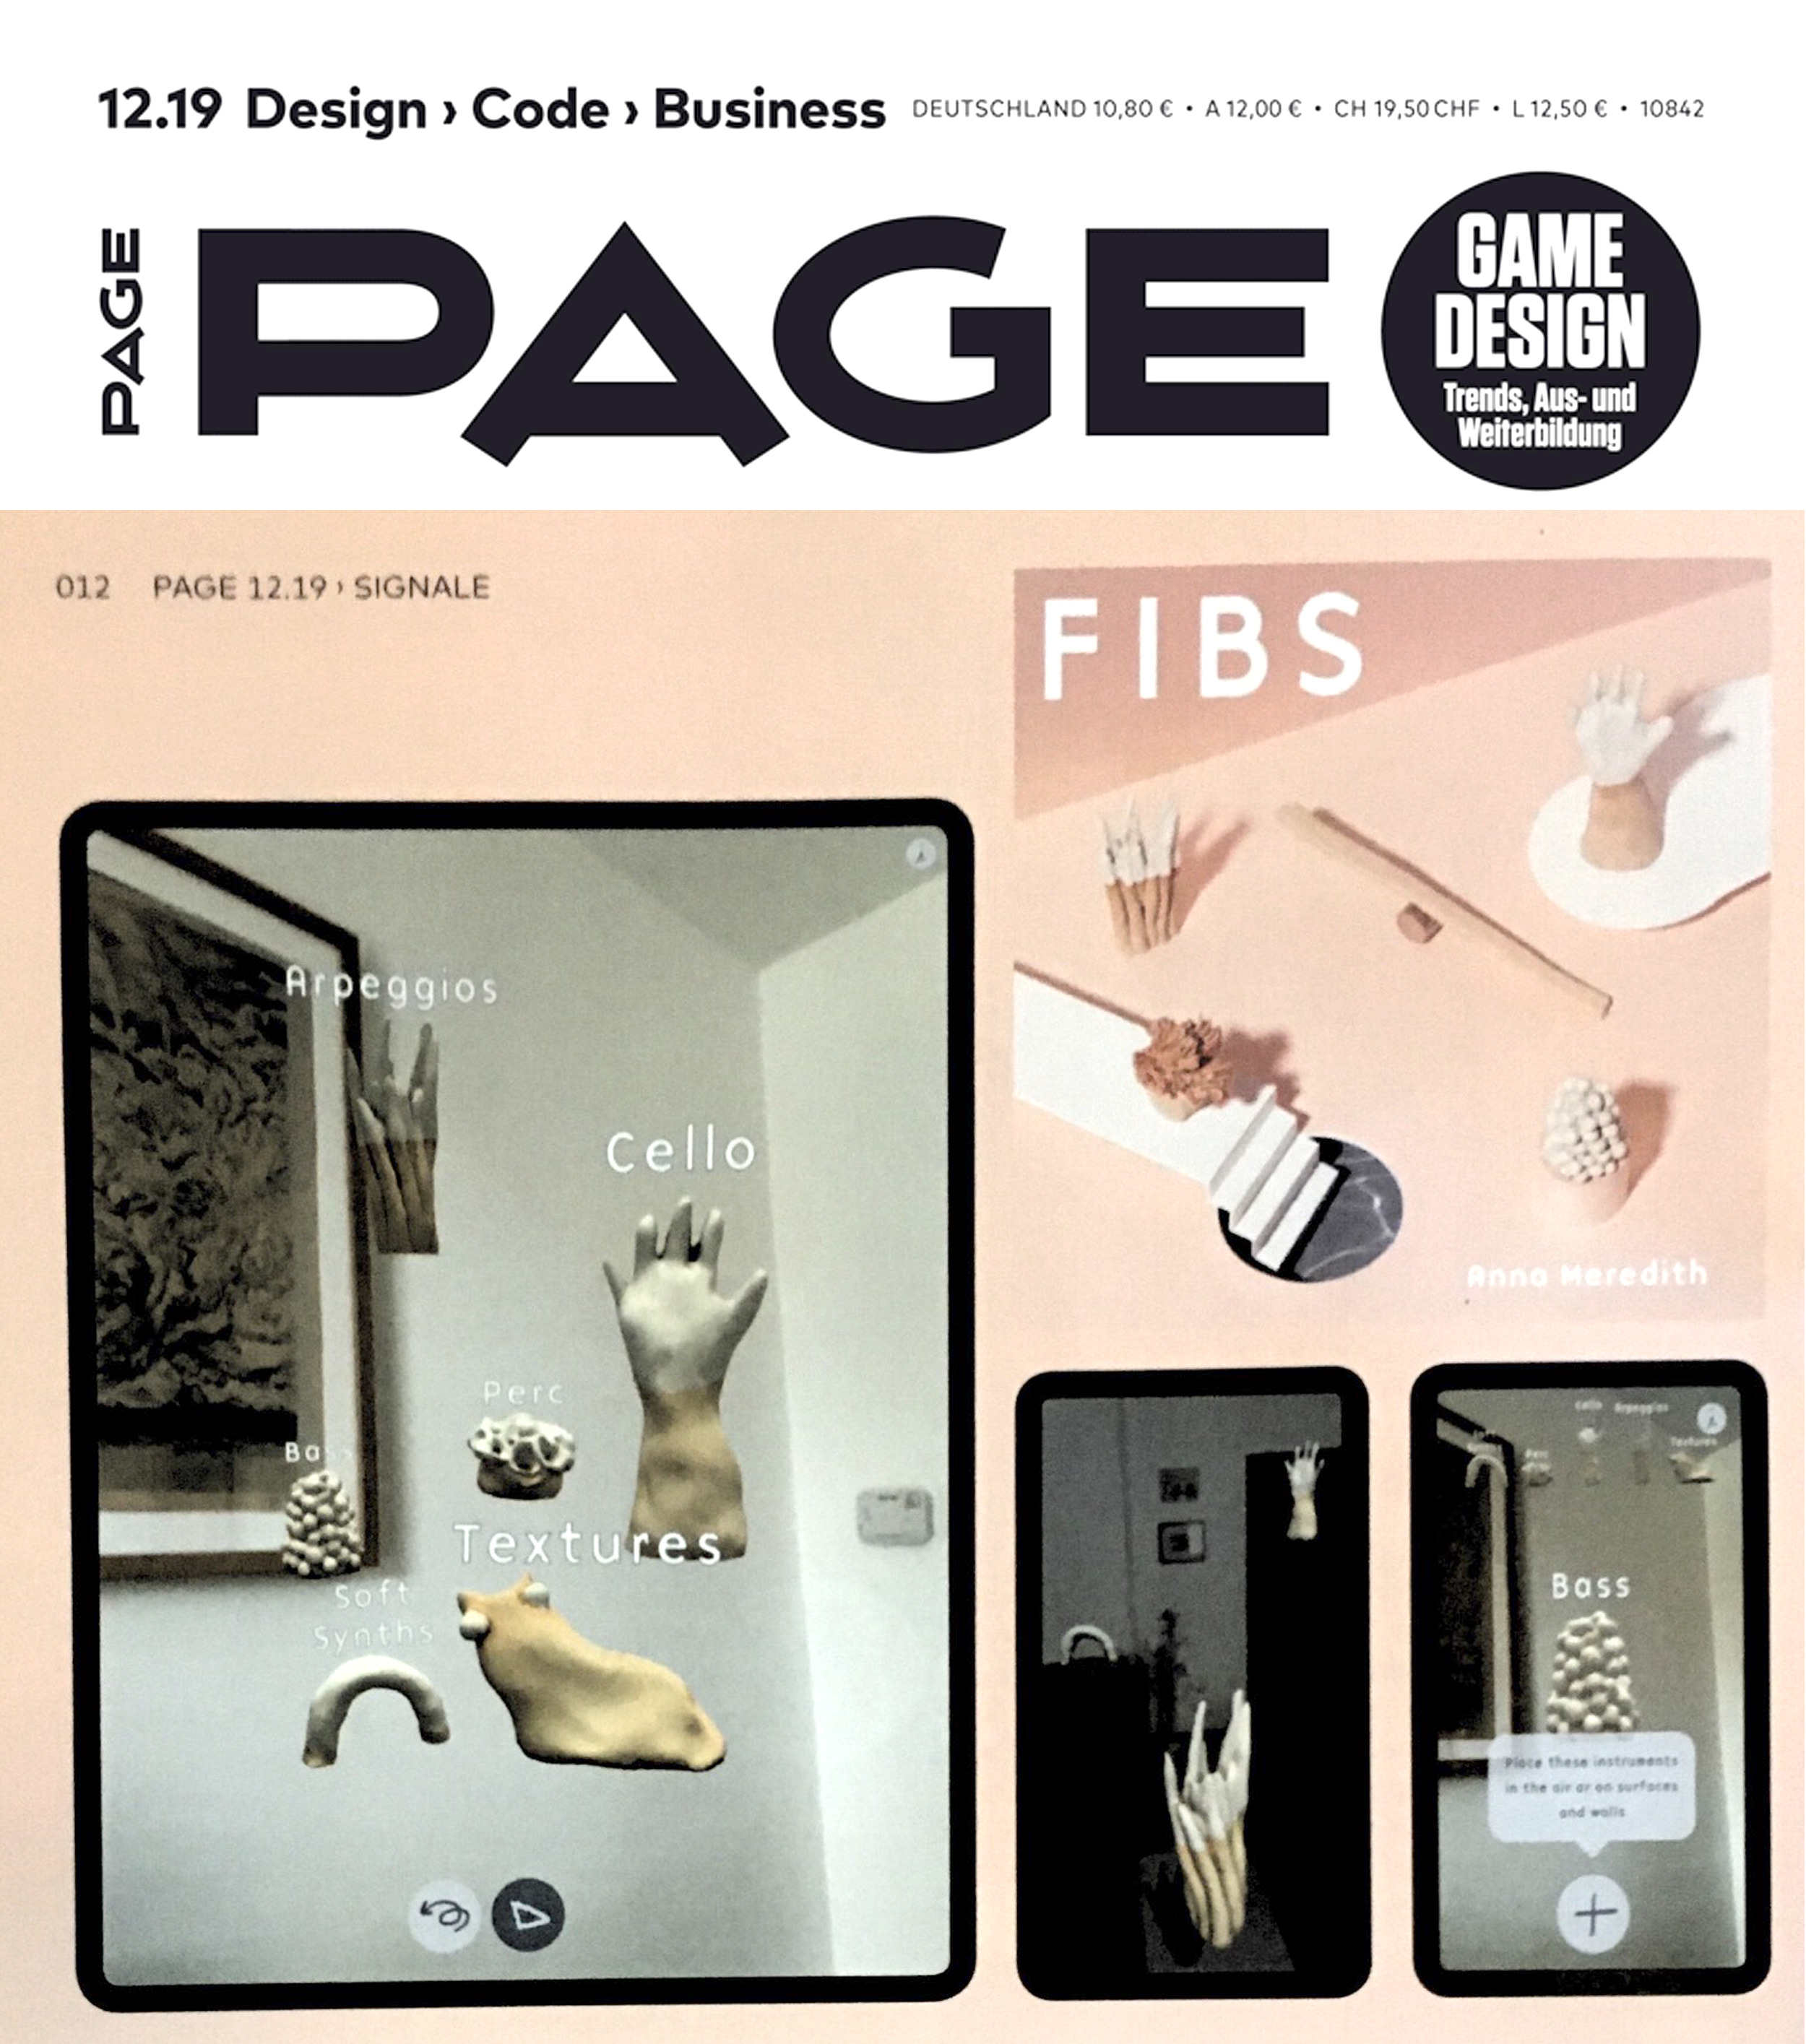 Page Magazine